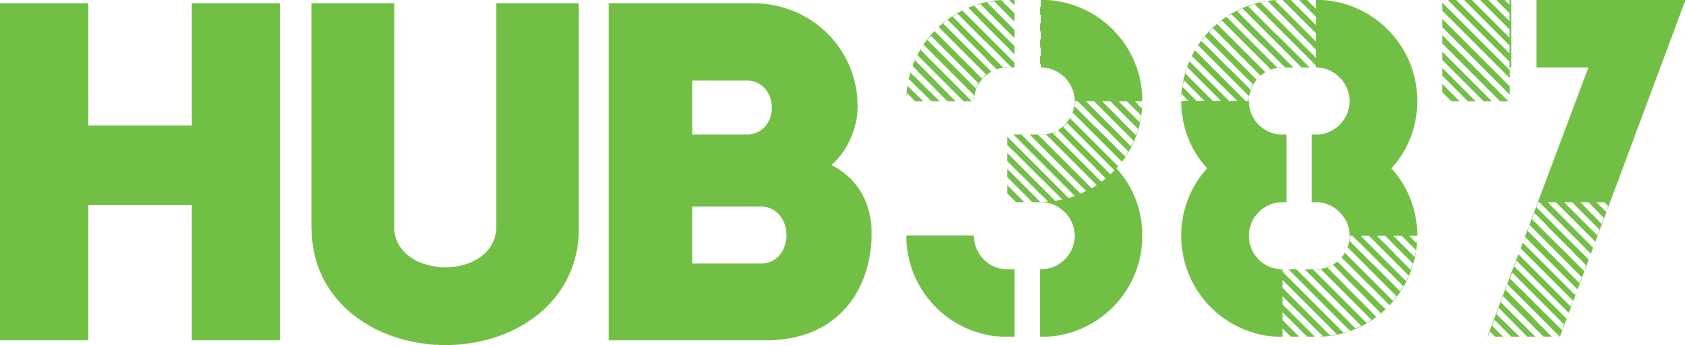 Hub387 logo